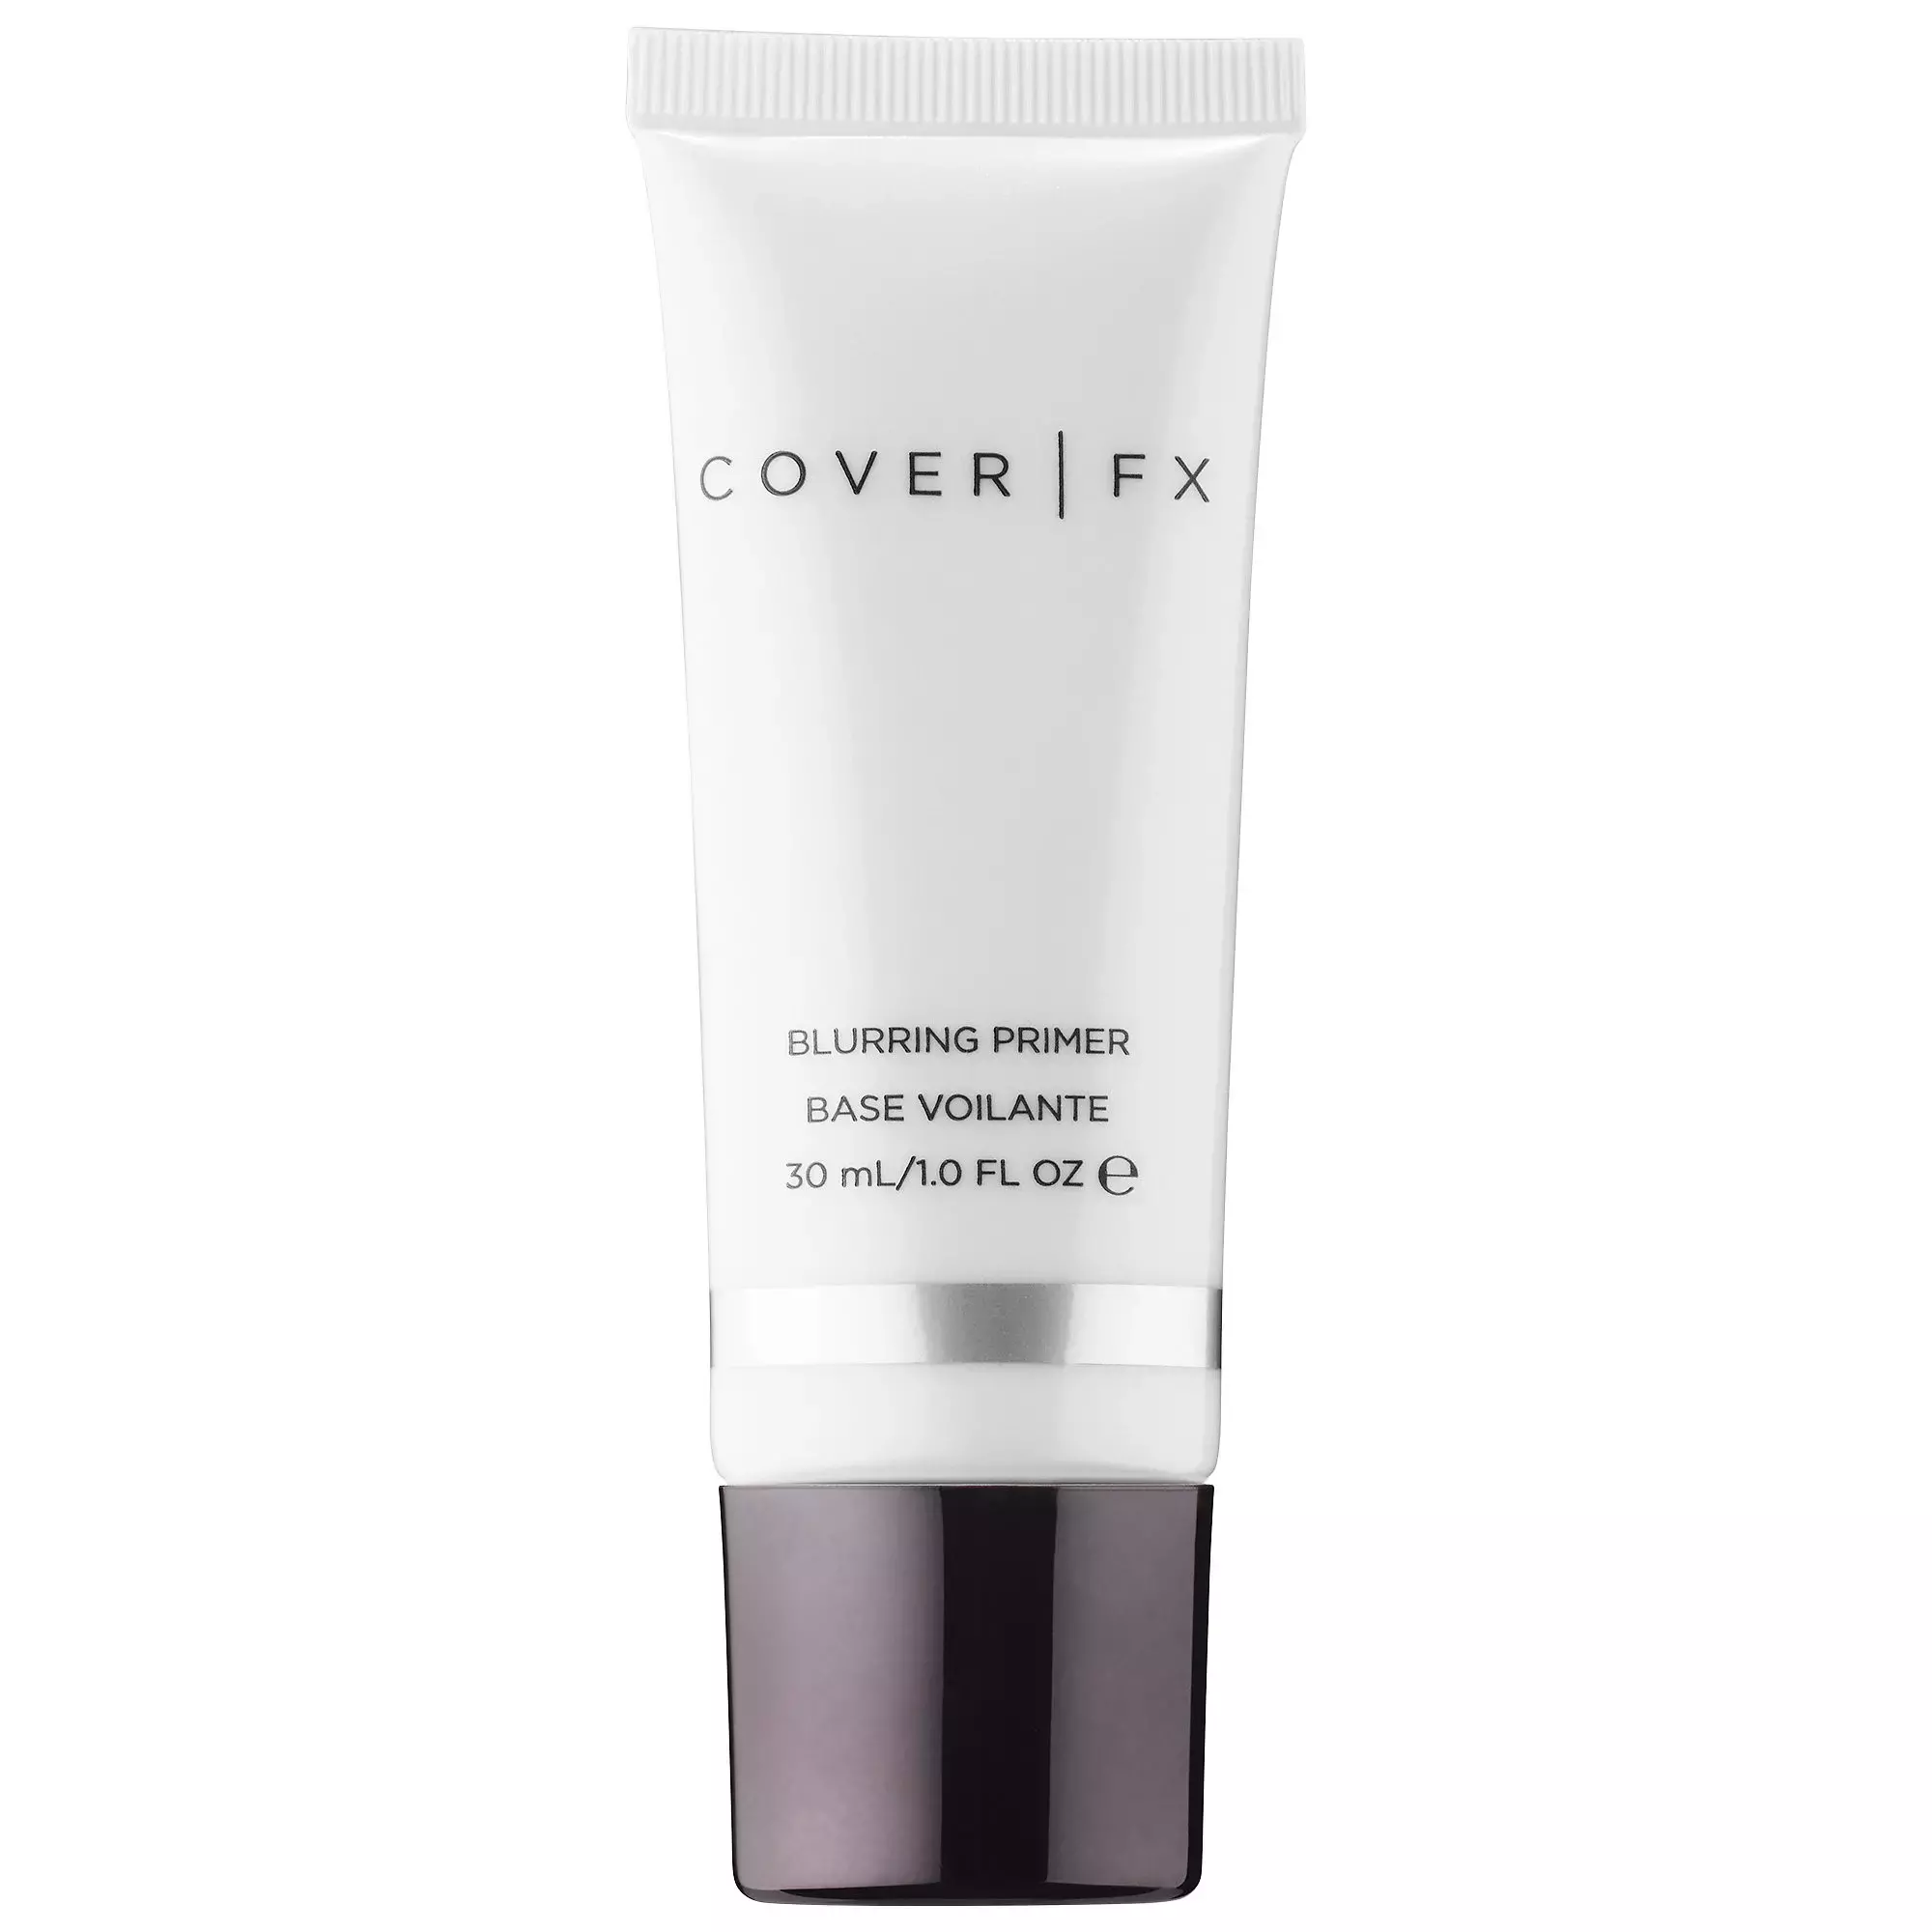 cover fx anti aging primer